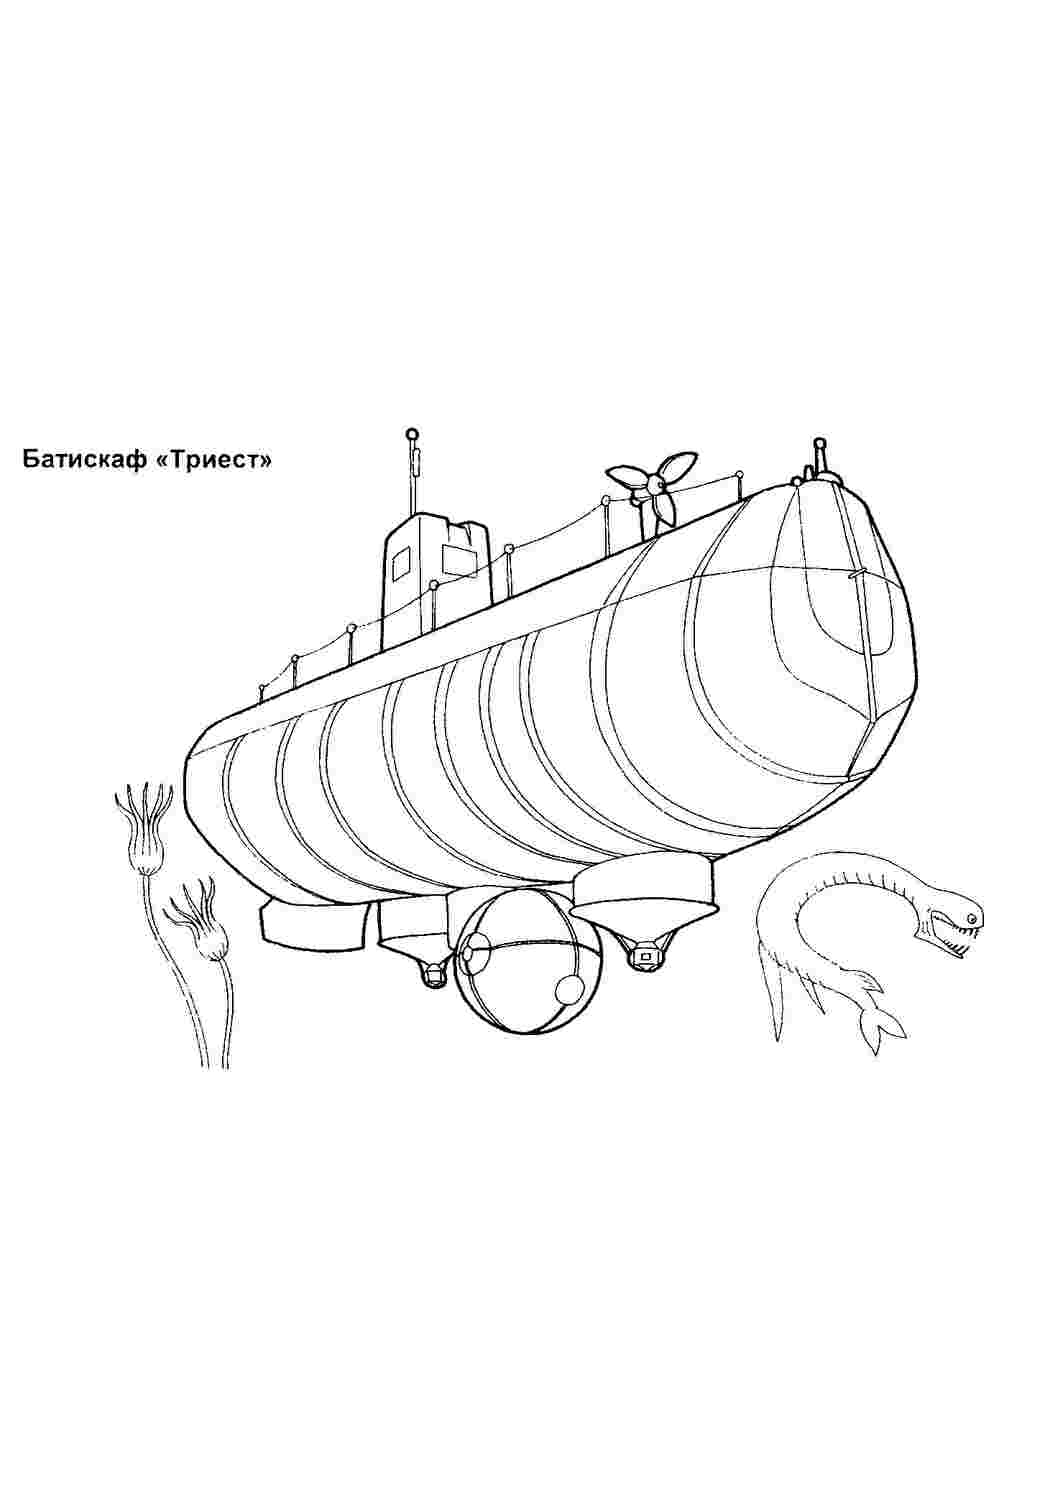 Раскраски Батискаф триест, подводная лодка Батискаф триест, подводная лодка  Раскраски скачать онлайн